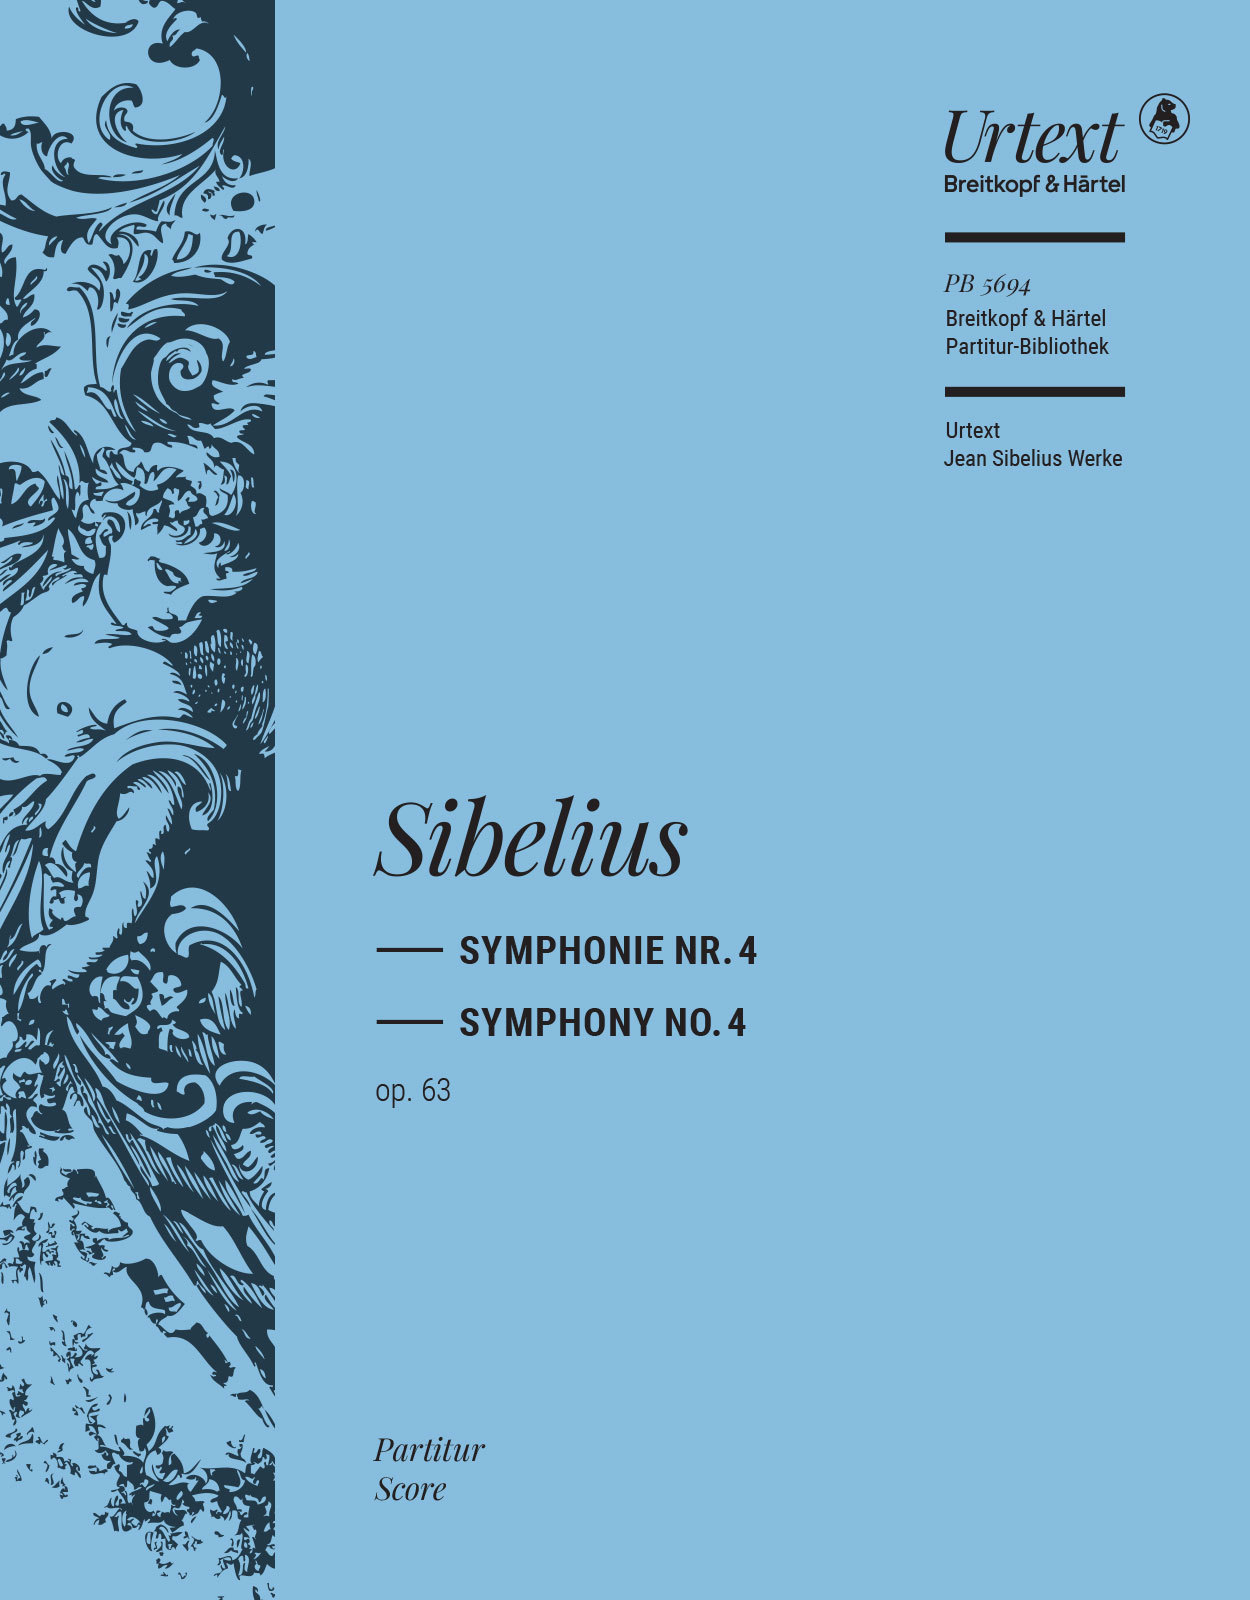 Sibelius Symphony No4 Op63 Full Score Sheet Music Songbook